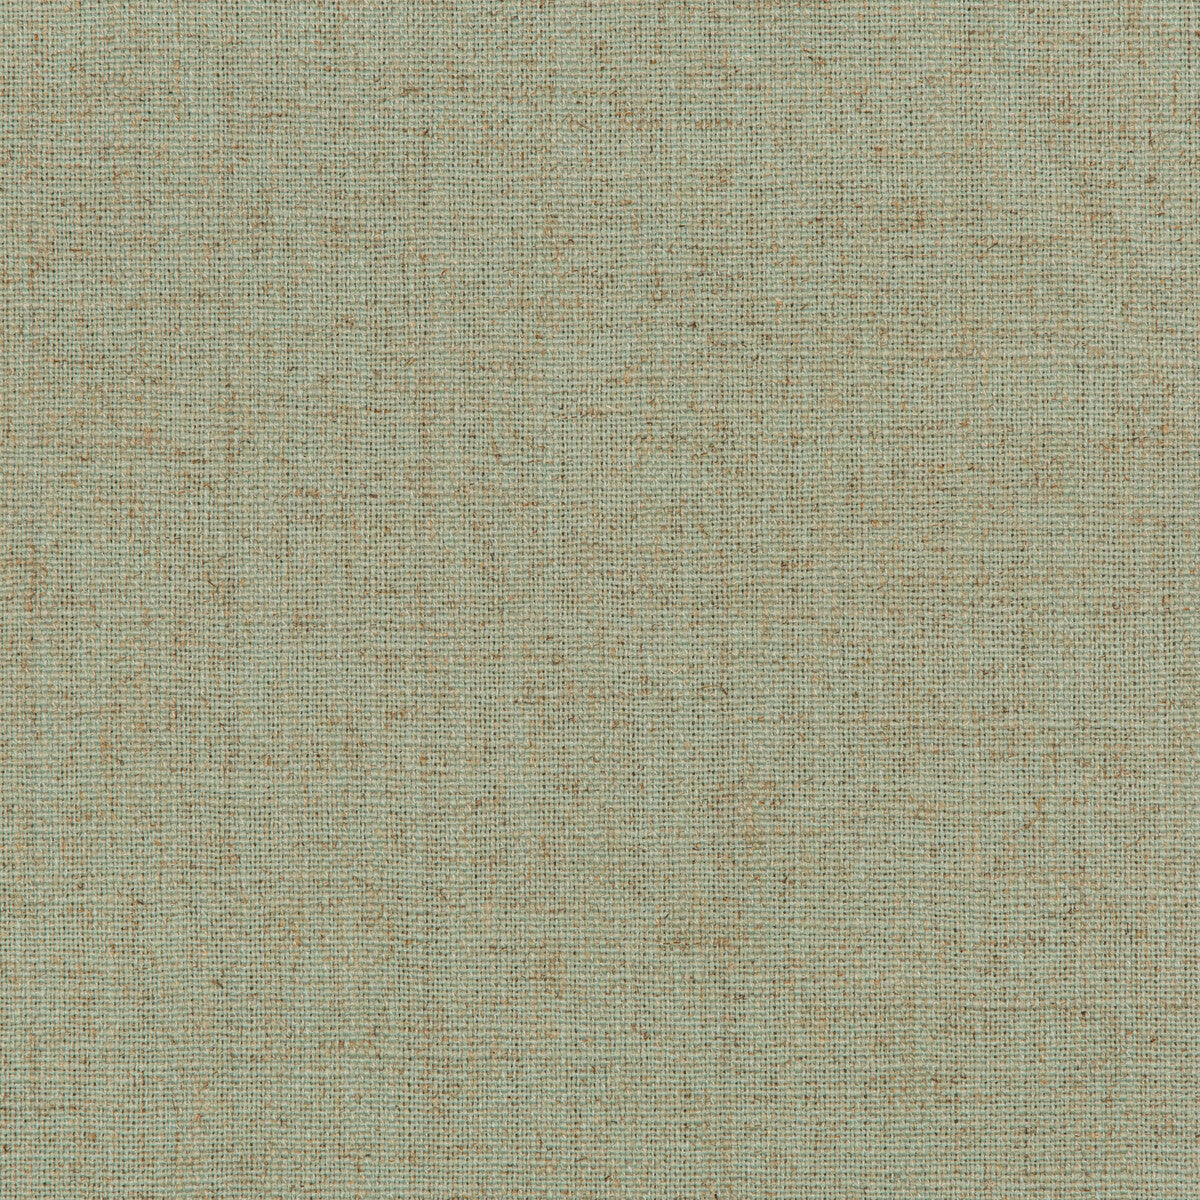 Kravet Smart fabric in 35941-23 color - pattern 35941.23.0 - by Kravet Smart in the Performance Kravetarmor collection